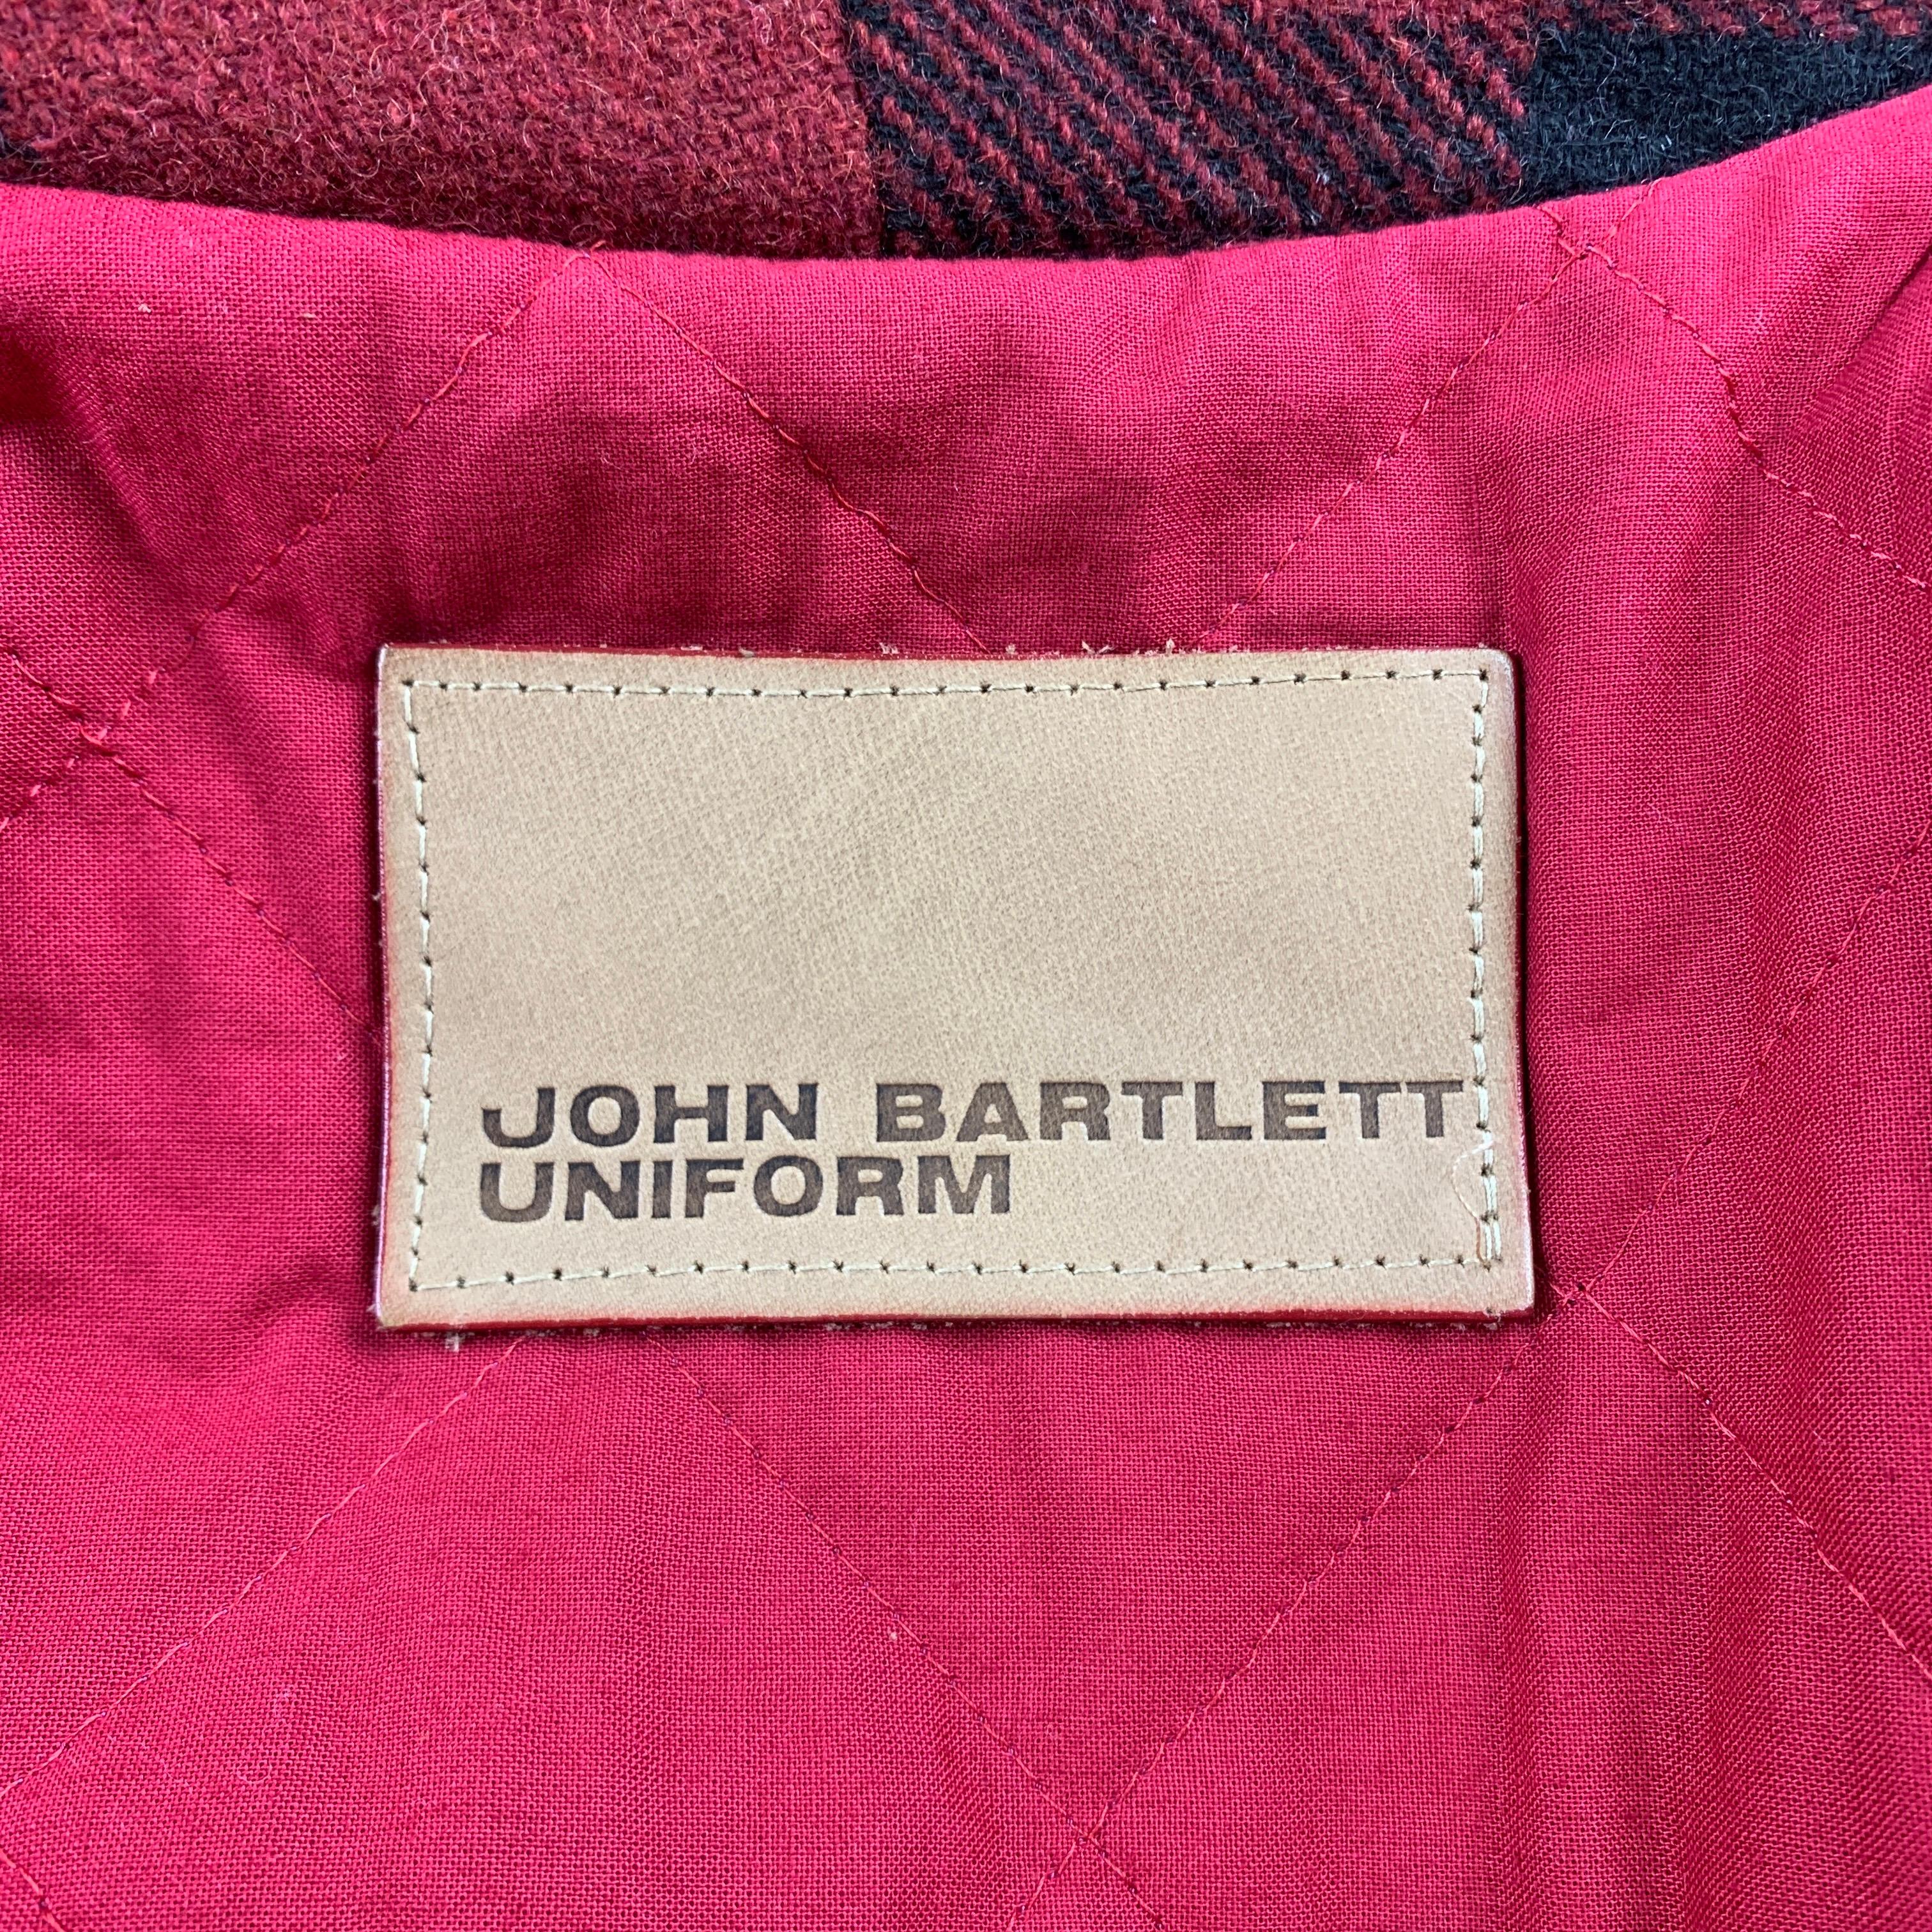 JOHN BARTLETT Uniform Size 40 Red & Black Plaid Wool Blend Zip Up Jacket 2